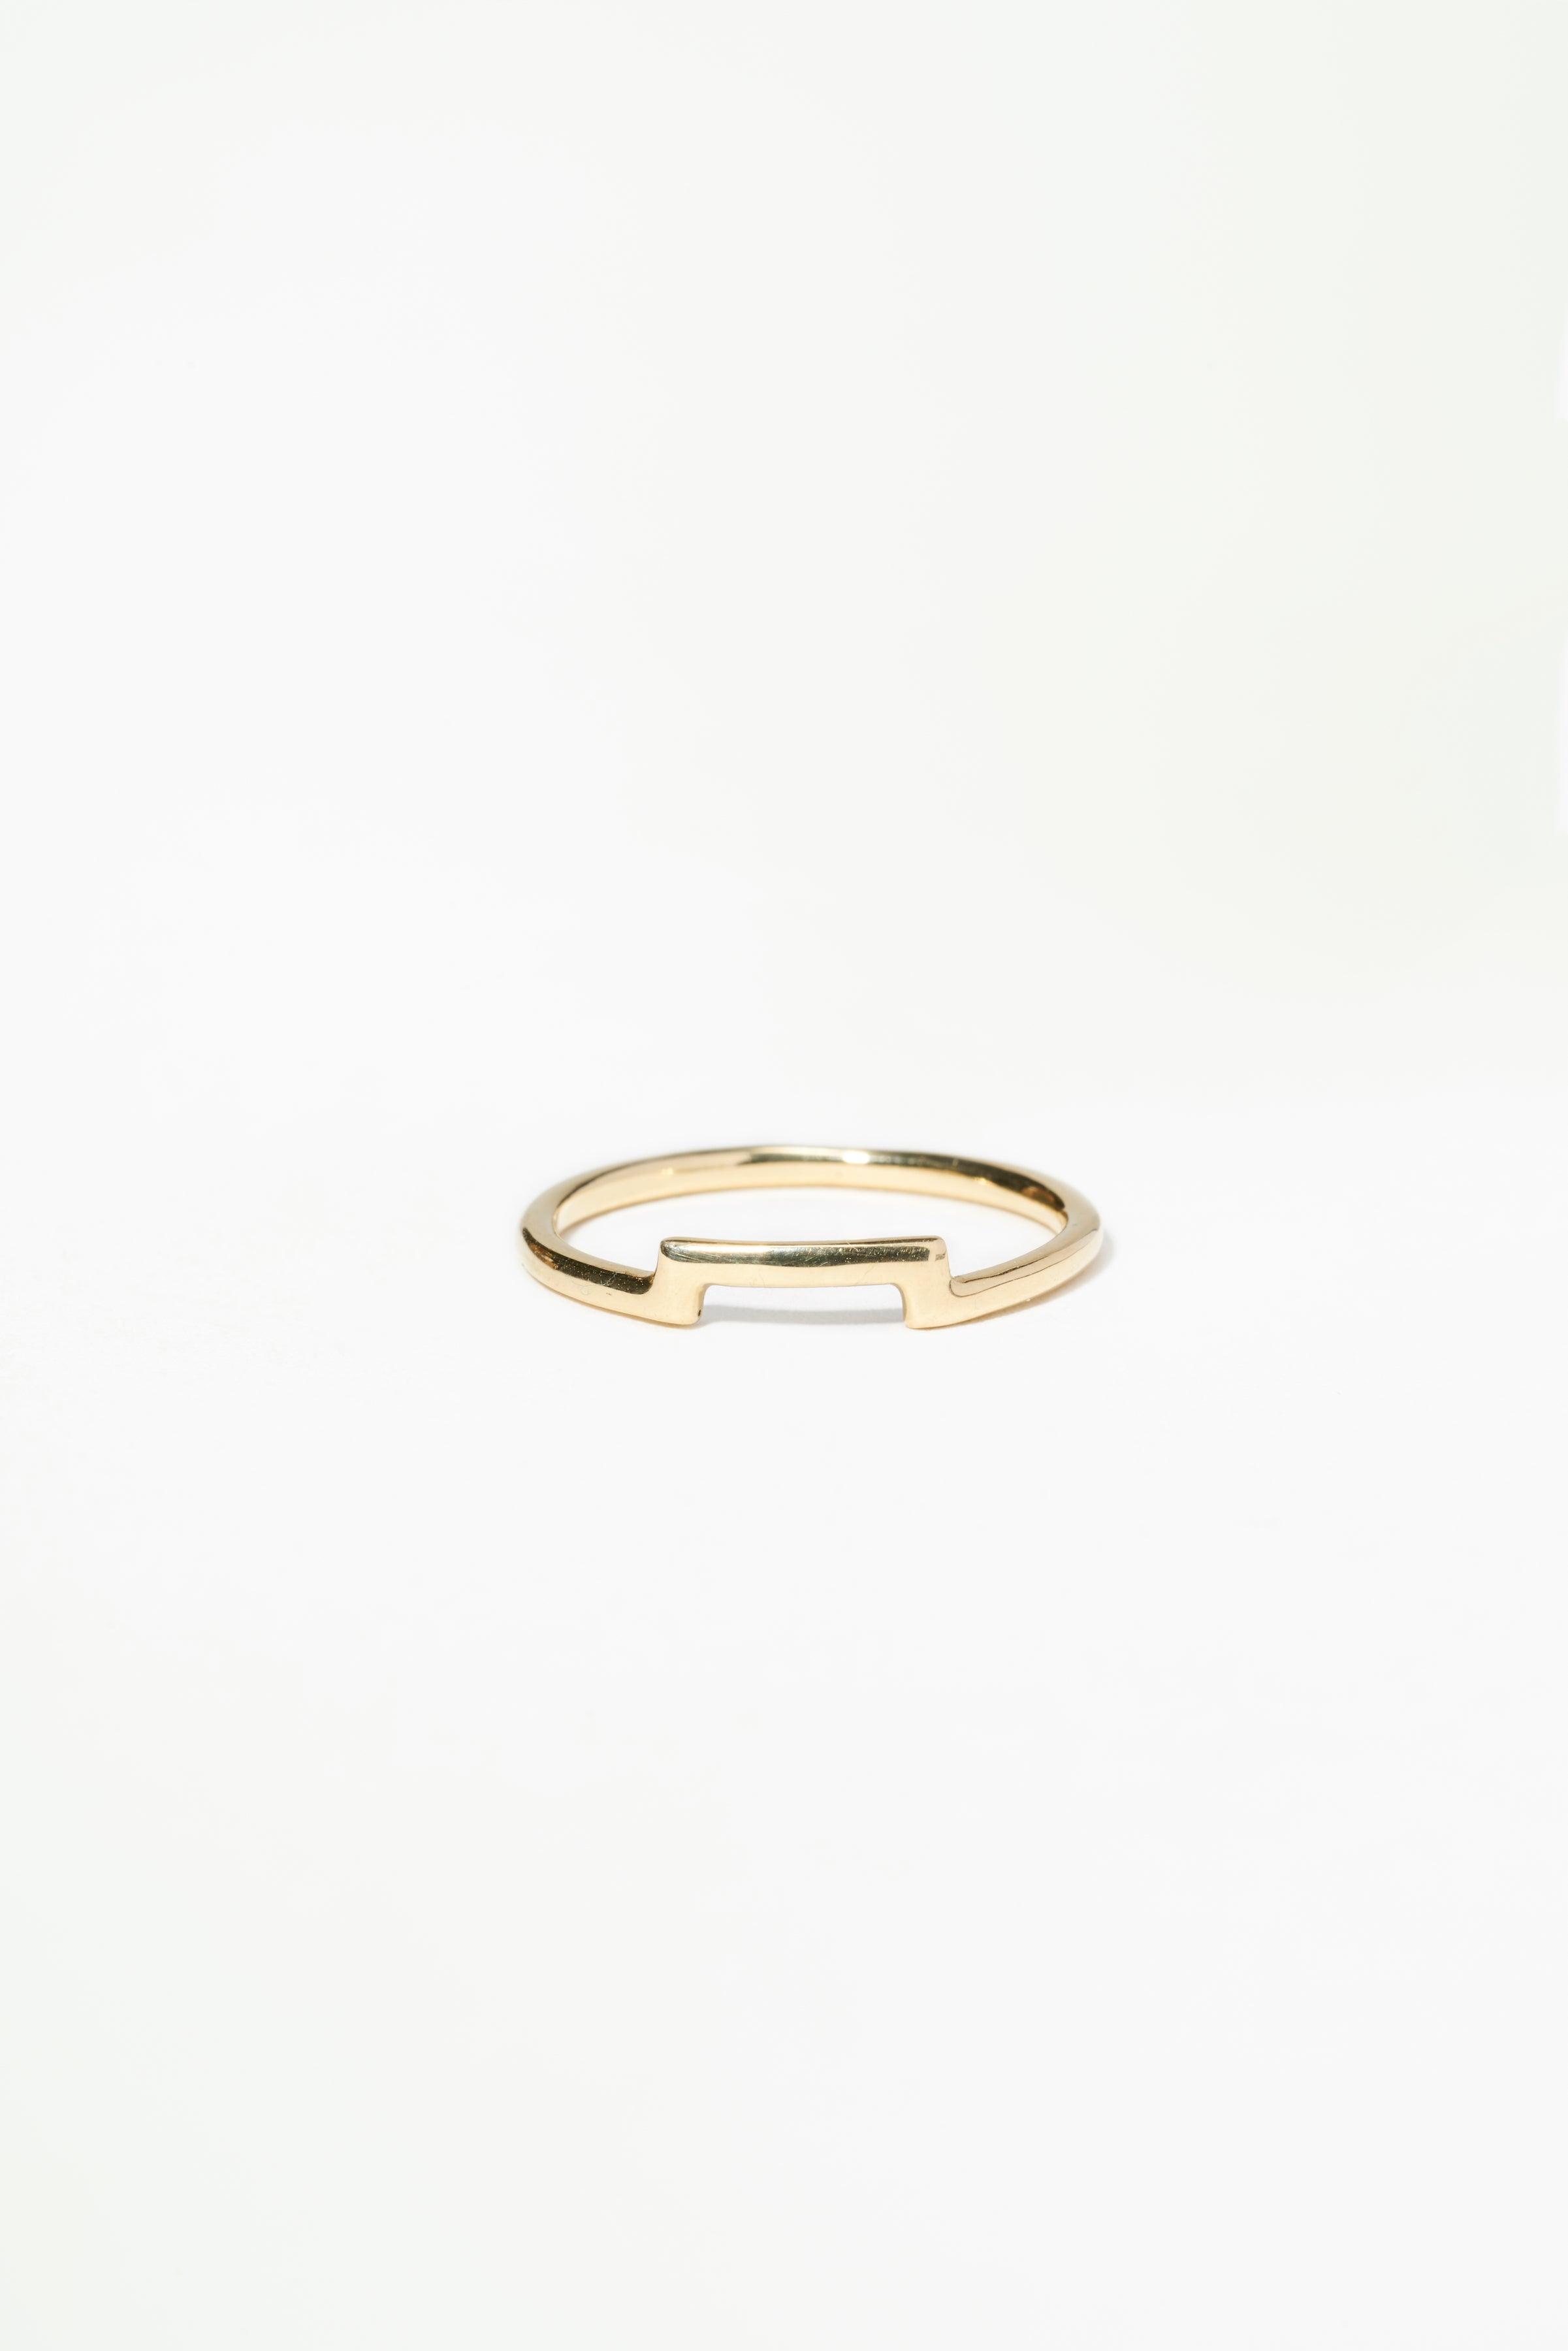 Amazon.com: Stunning Ring Photo Prop Set - Frame, 22.5